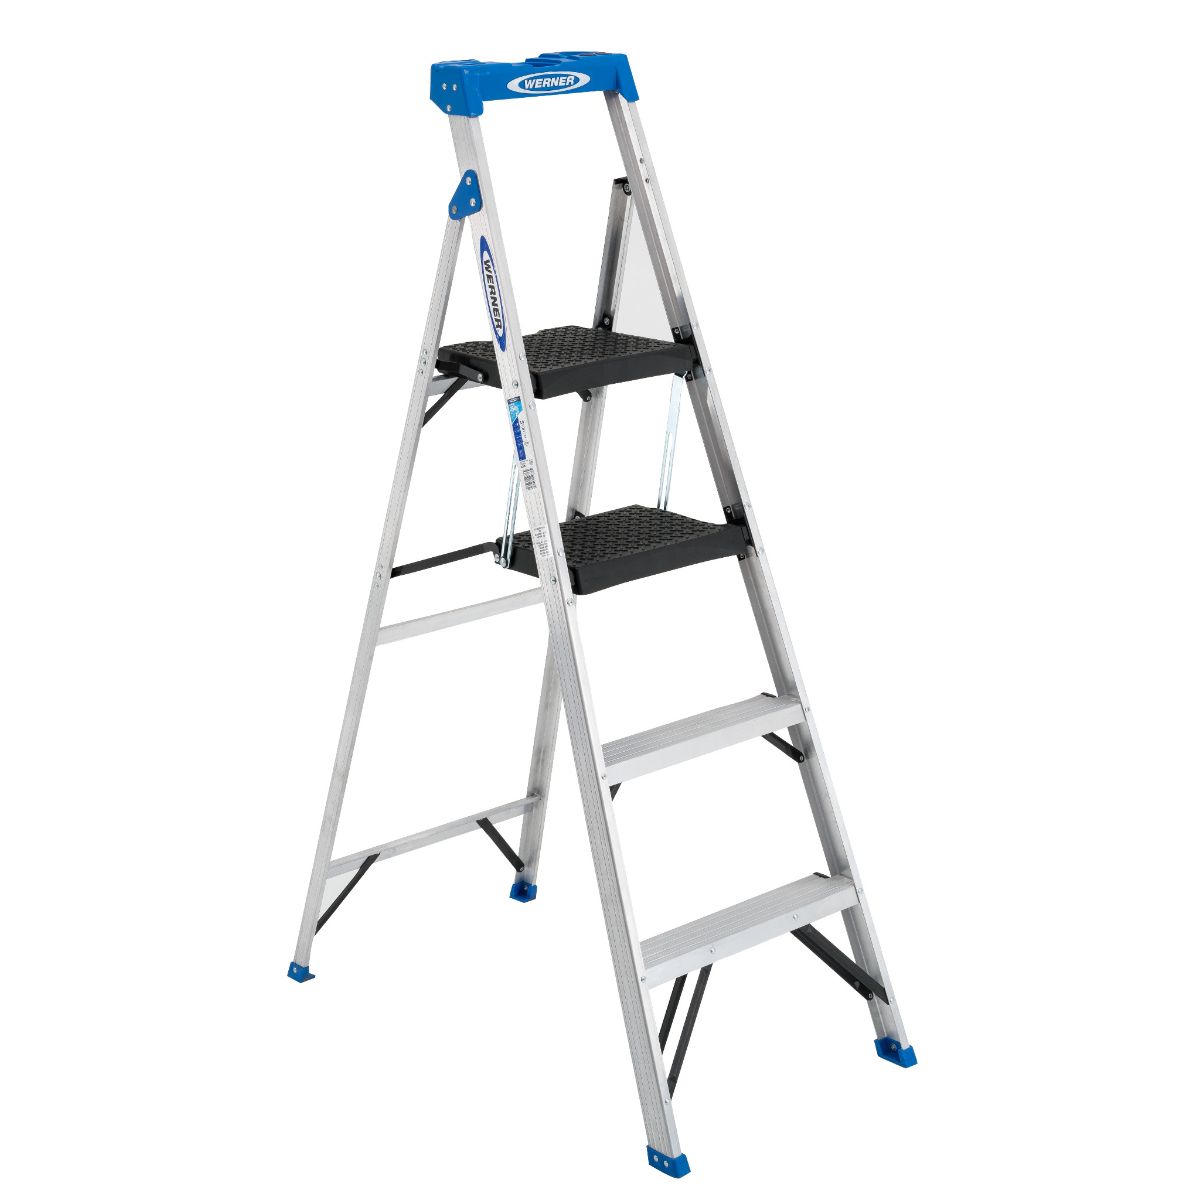 Acs386 5.5 Ft. Type I Aluminum Compact Step Ladder